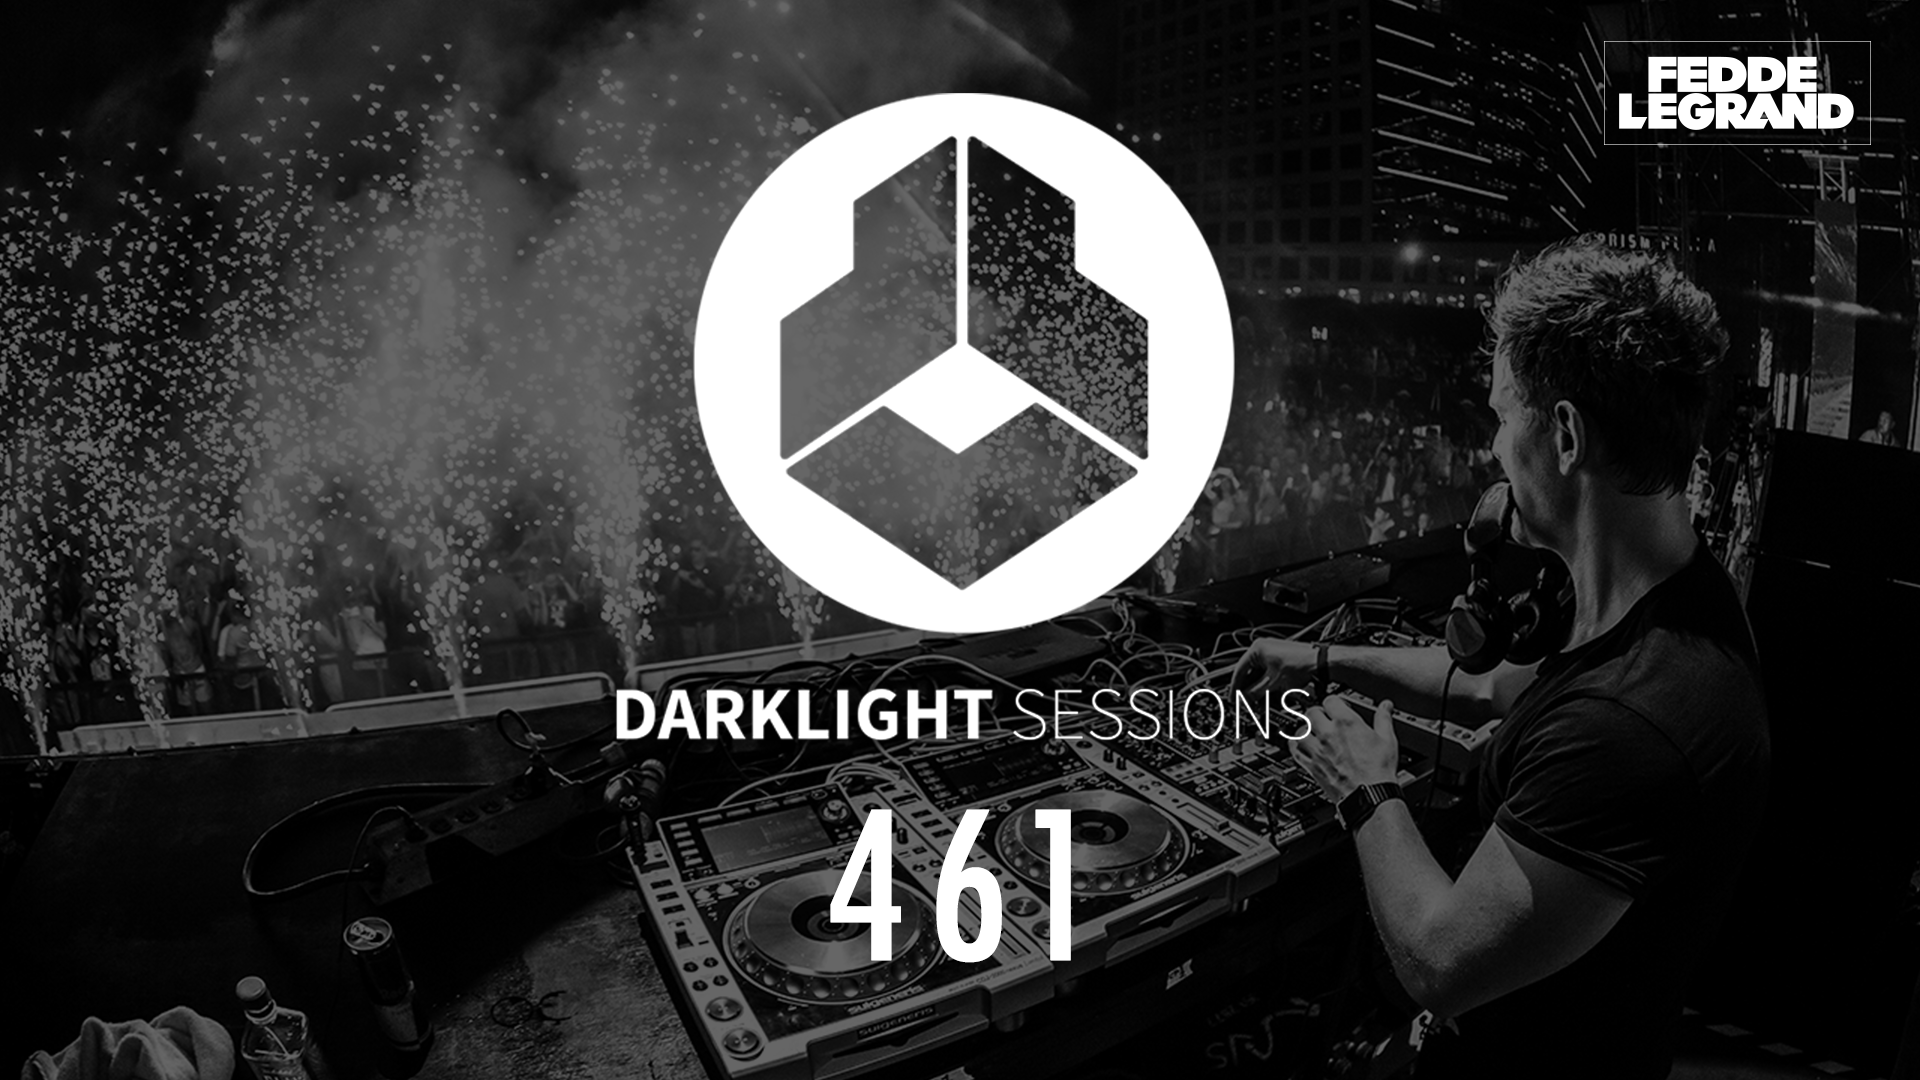 Darklight Sessions 461